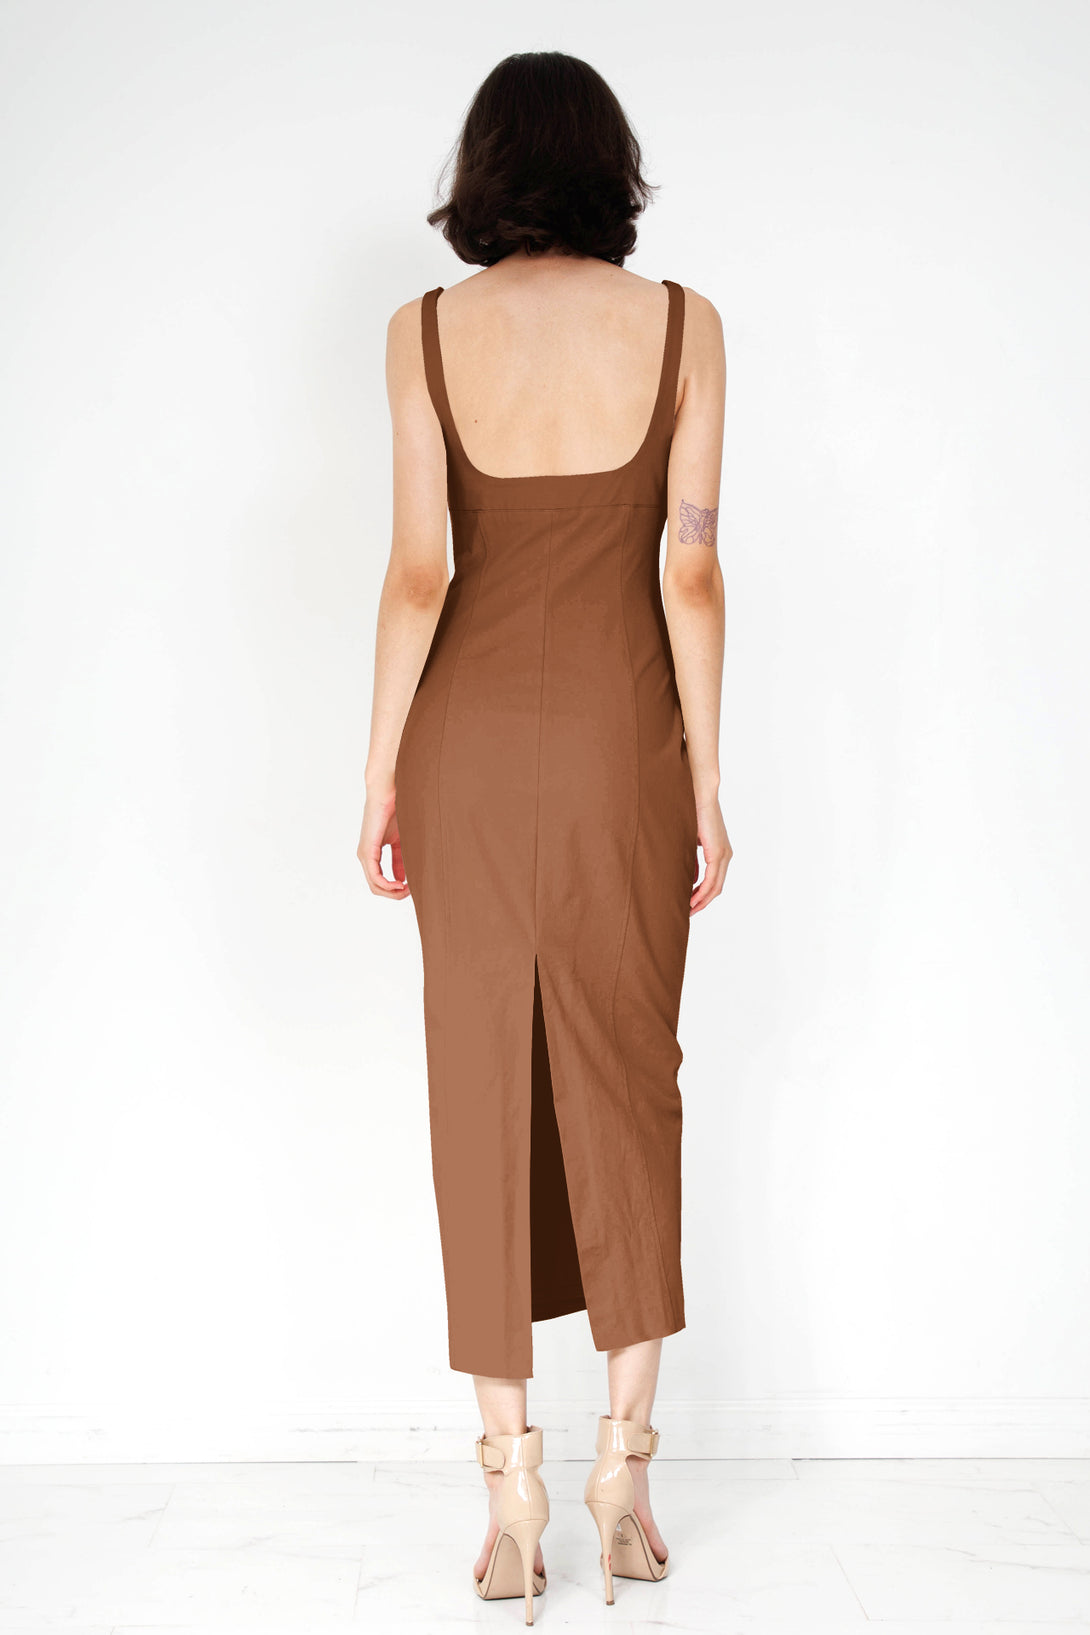 sleeveless midi dress, HT 360 Collective, midi length dresses, lace up backless dress, chocolate brown midi dress,